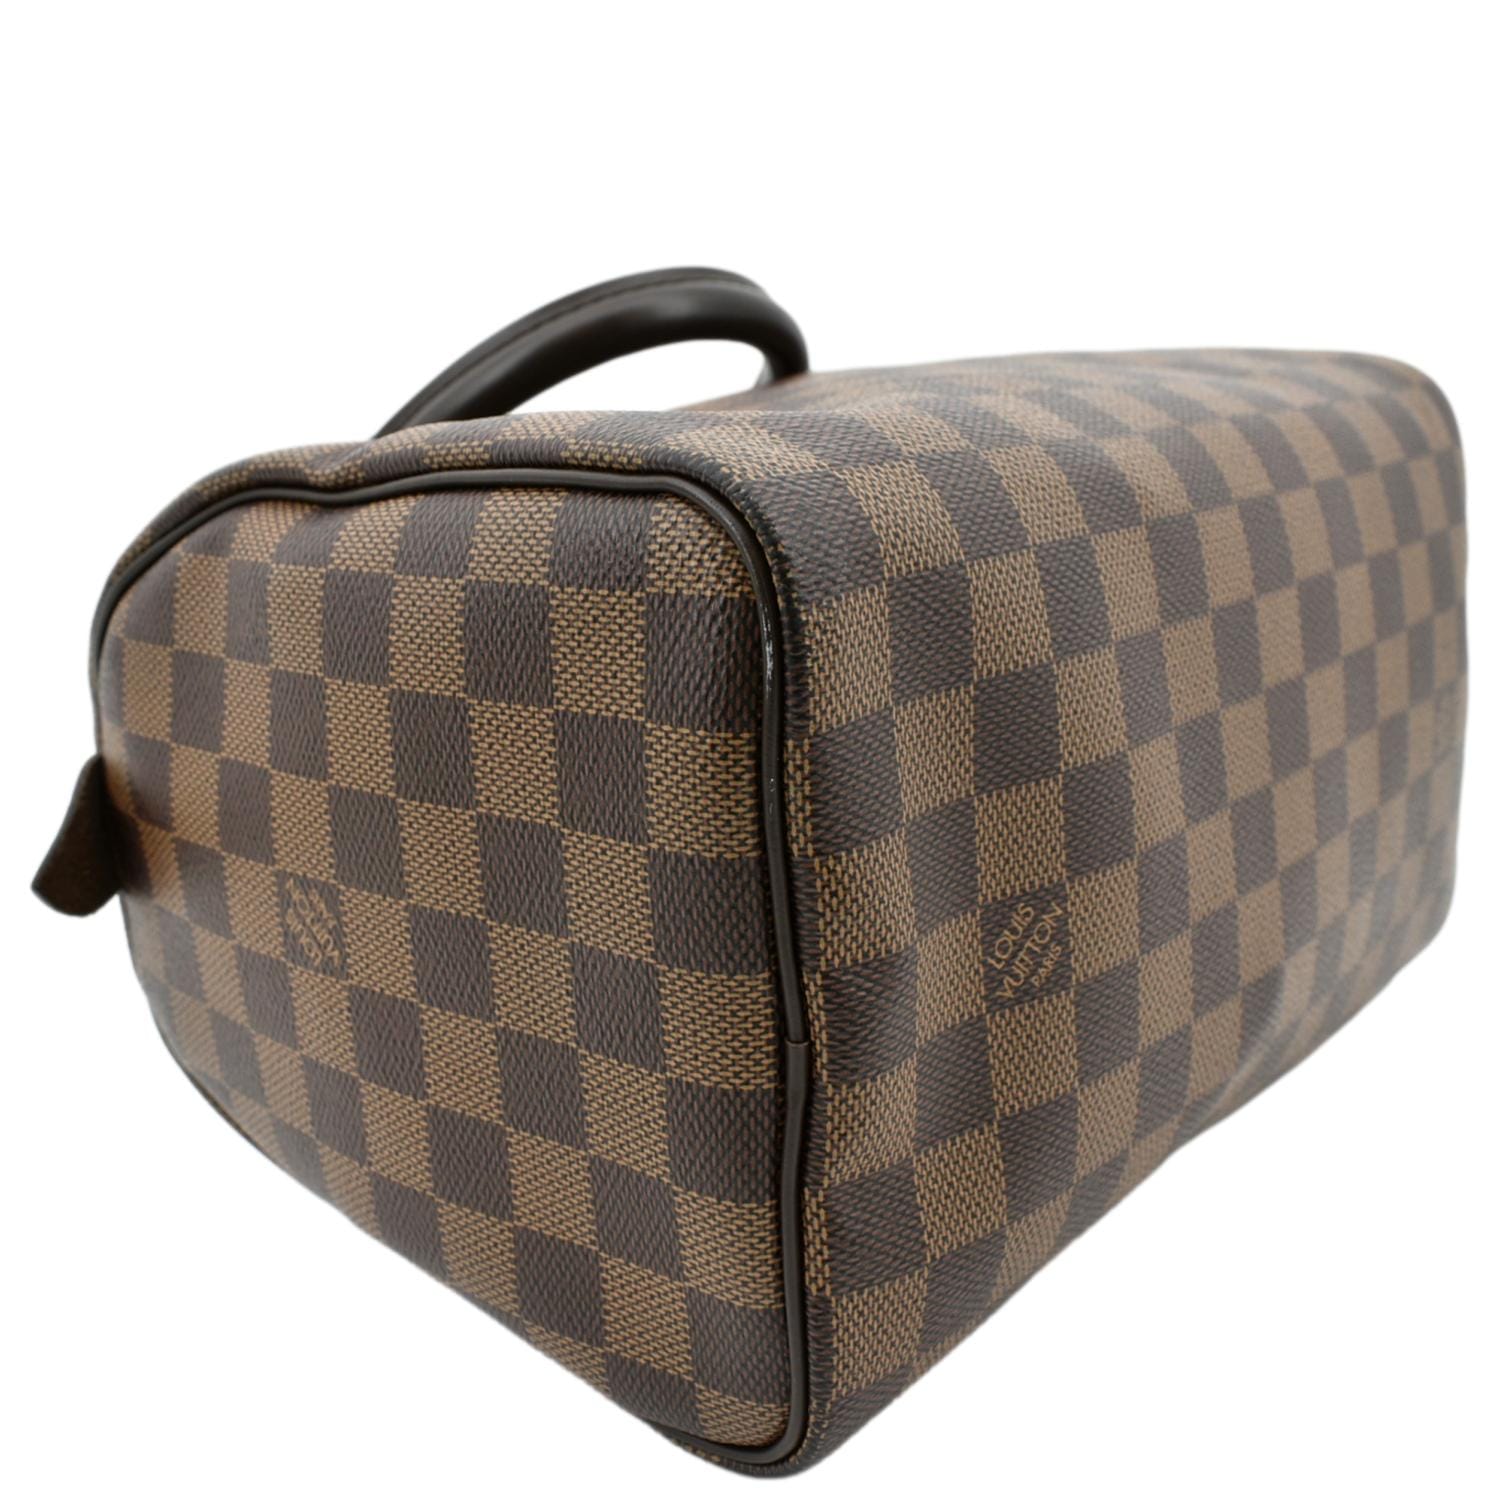 Louis Vuitton Speedy Handbag Damier 25 - ShopStyle Satchels & Top